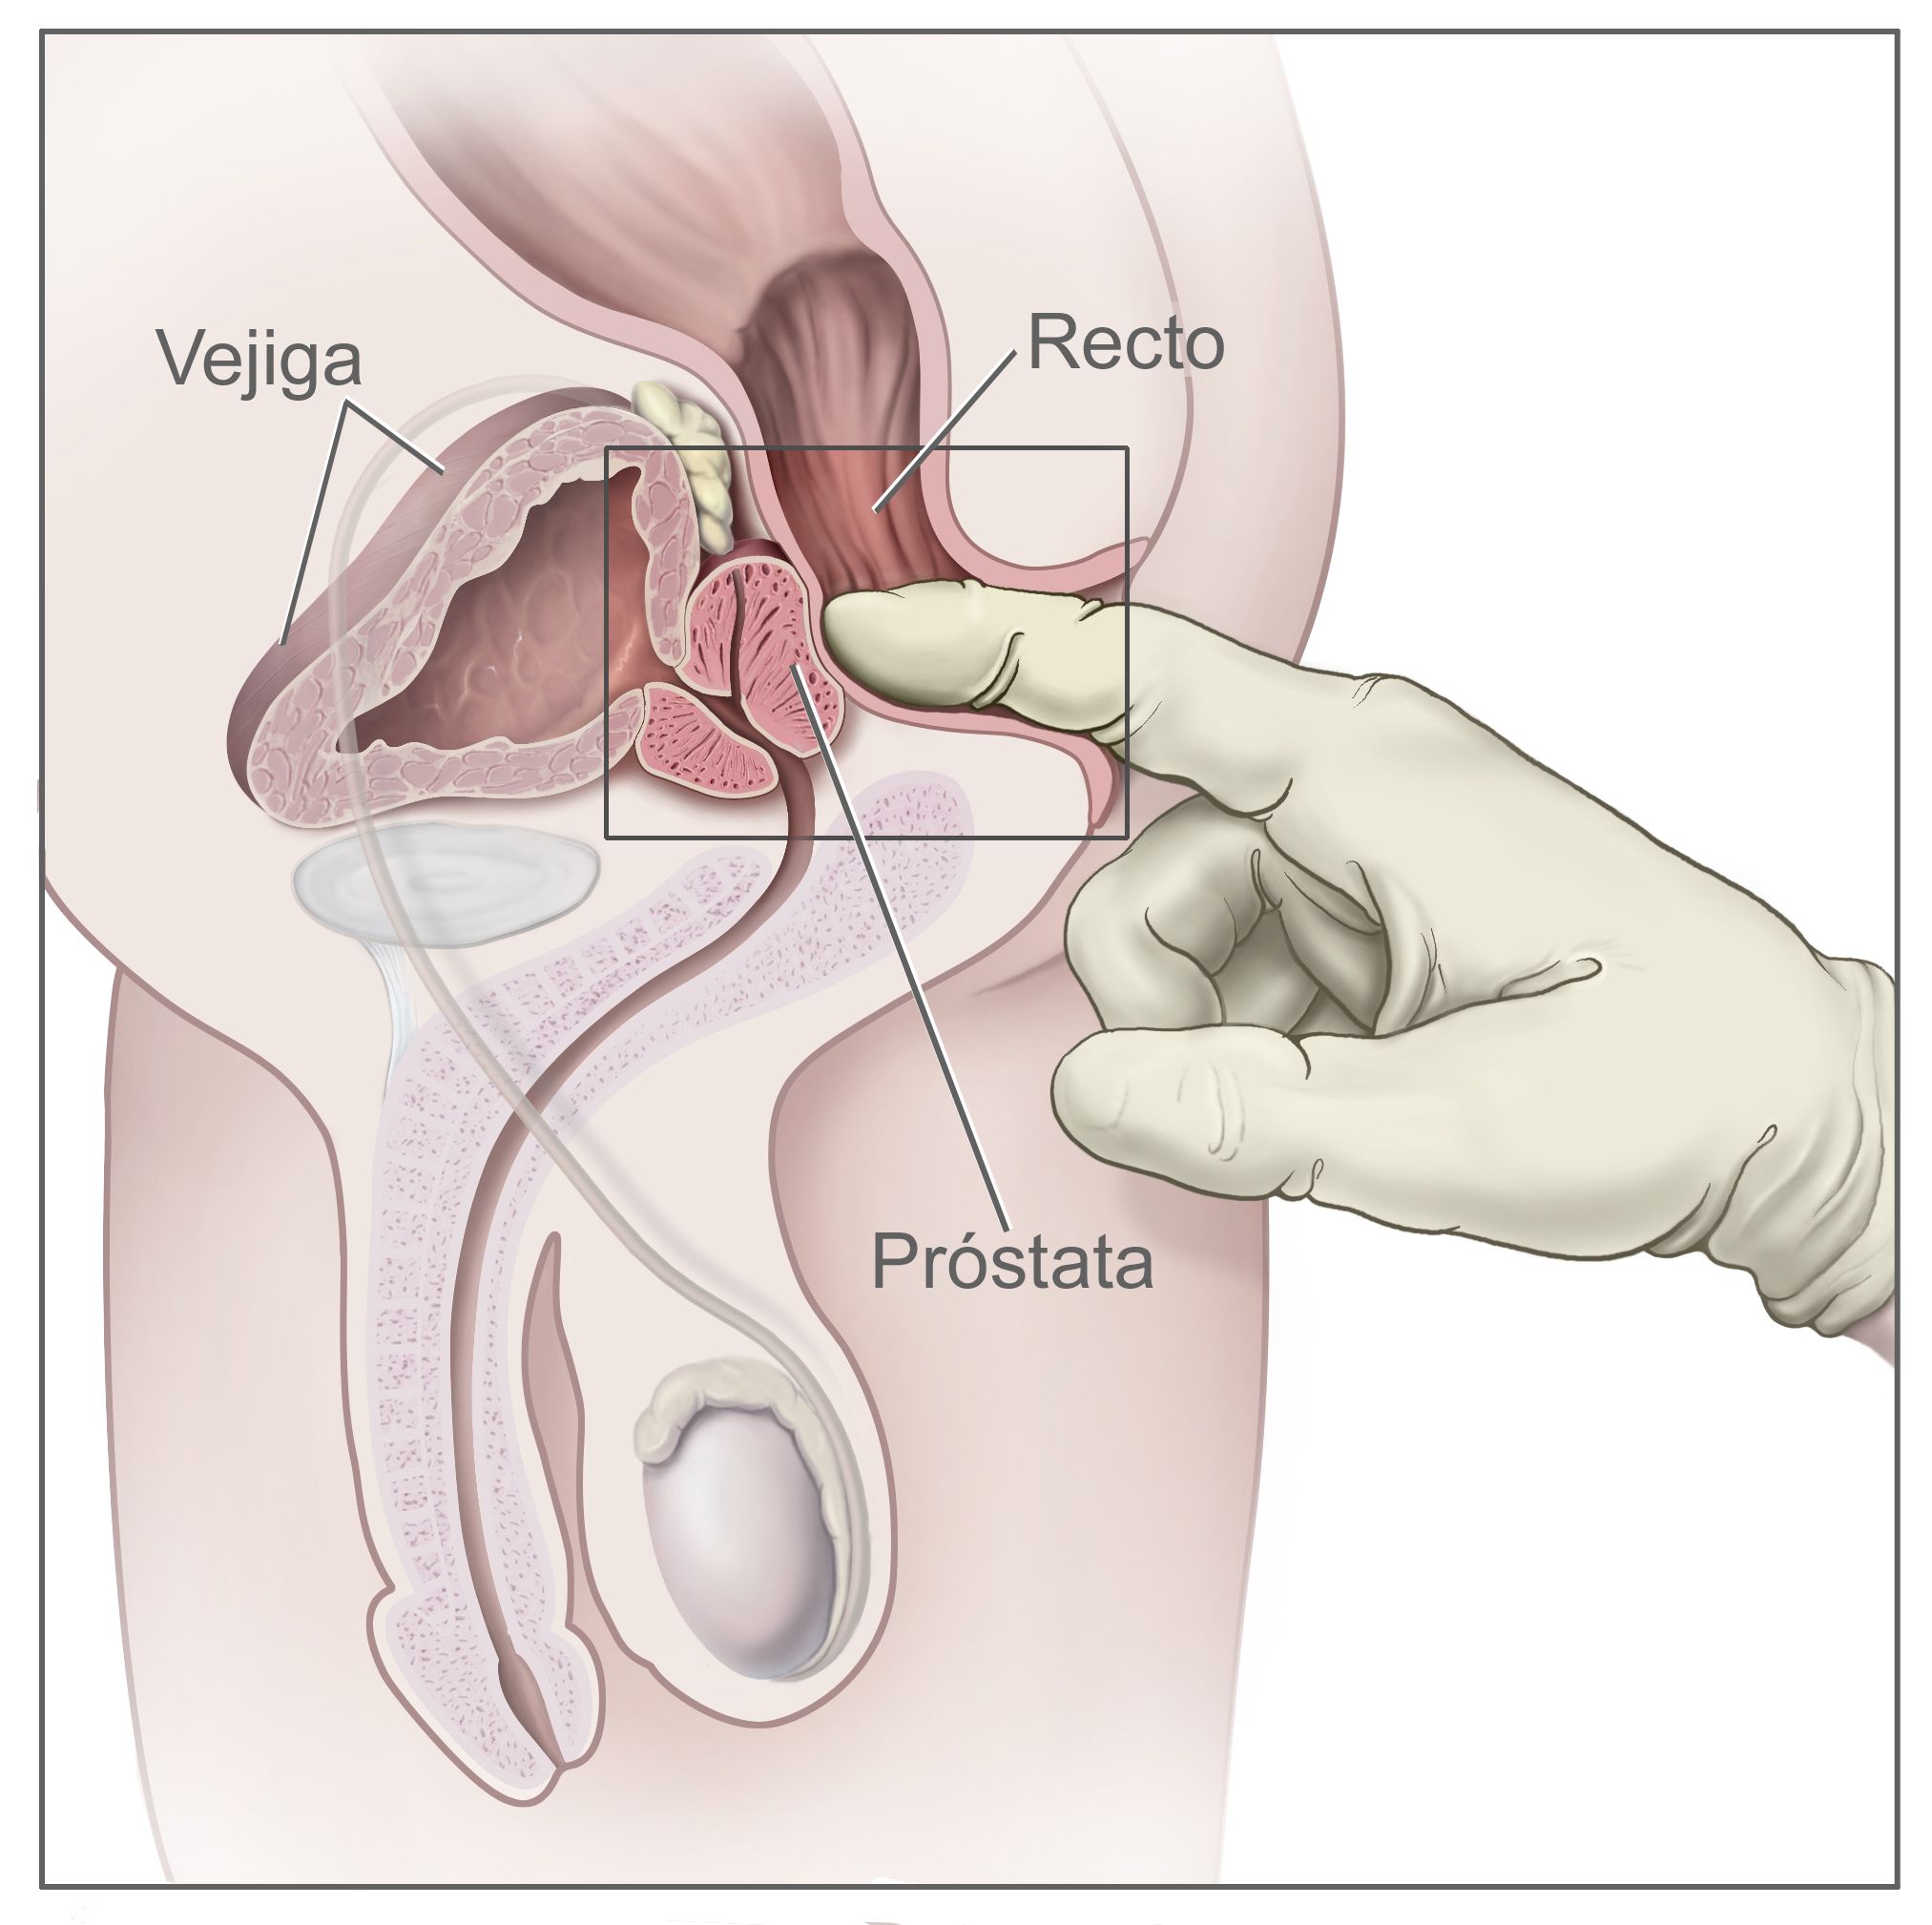 Cancer de prostata hombres jovenes. Cancer de prostata hombres jovenes